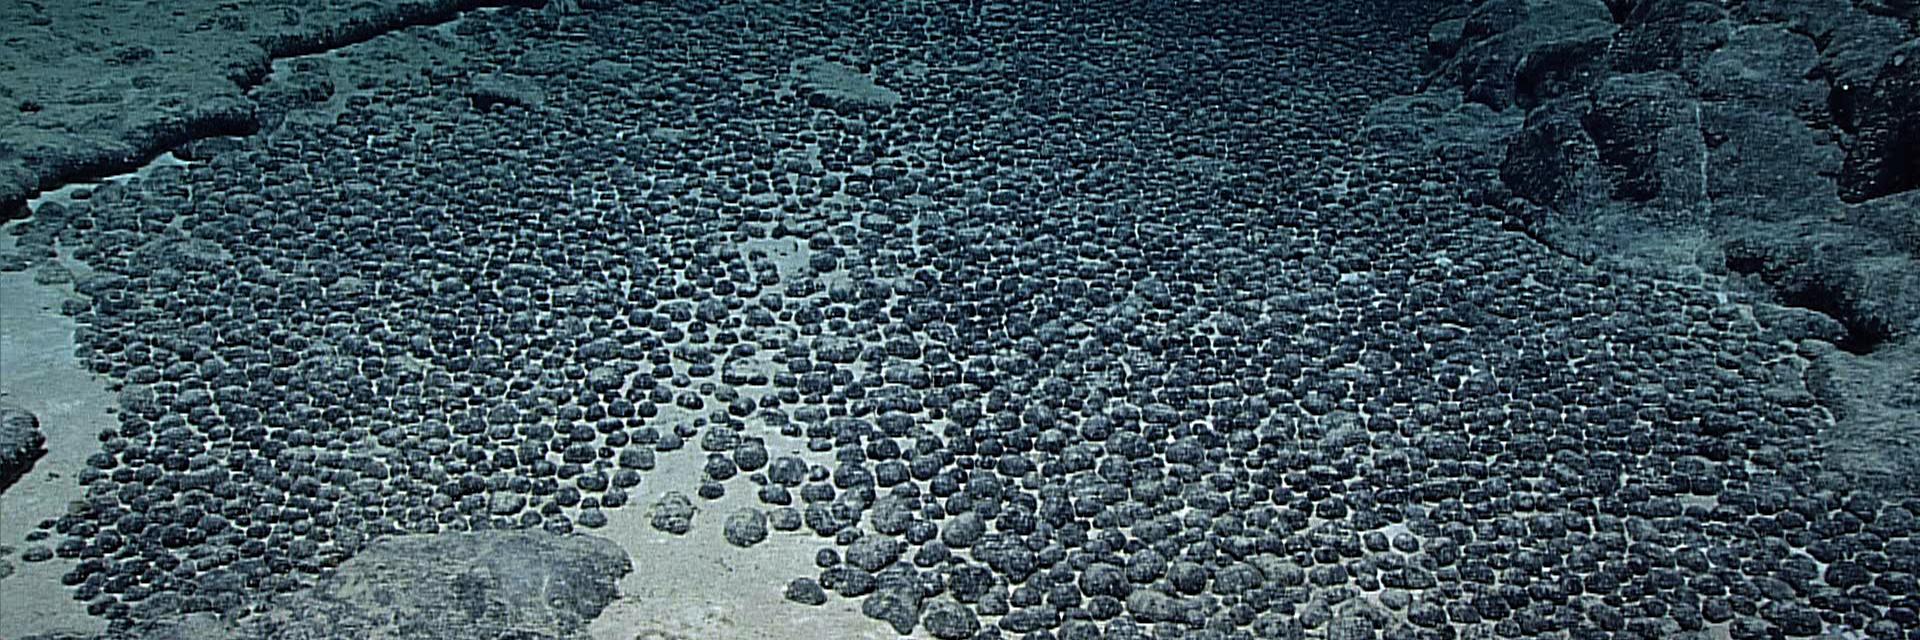 Polymetallic nodules on the the ocean floor. 